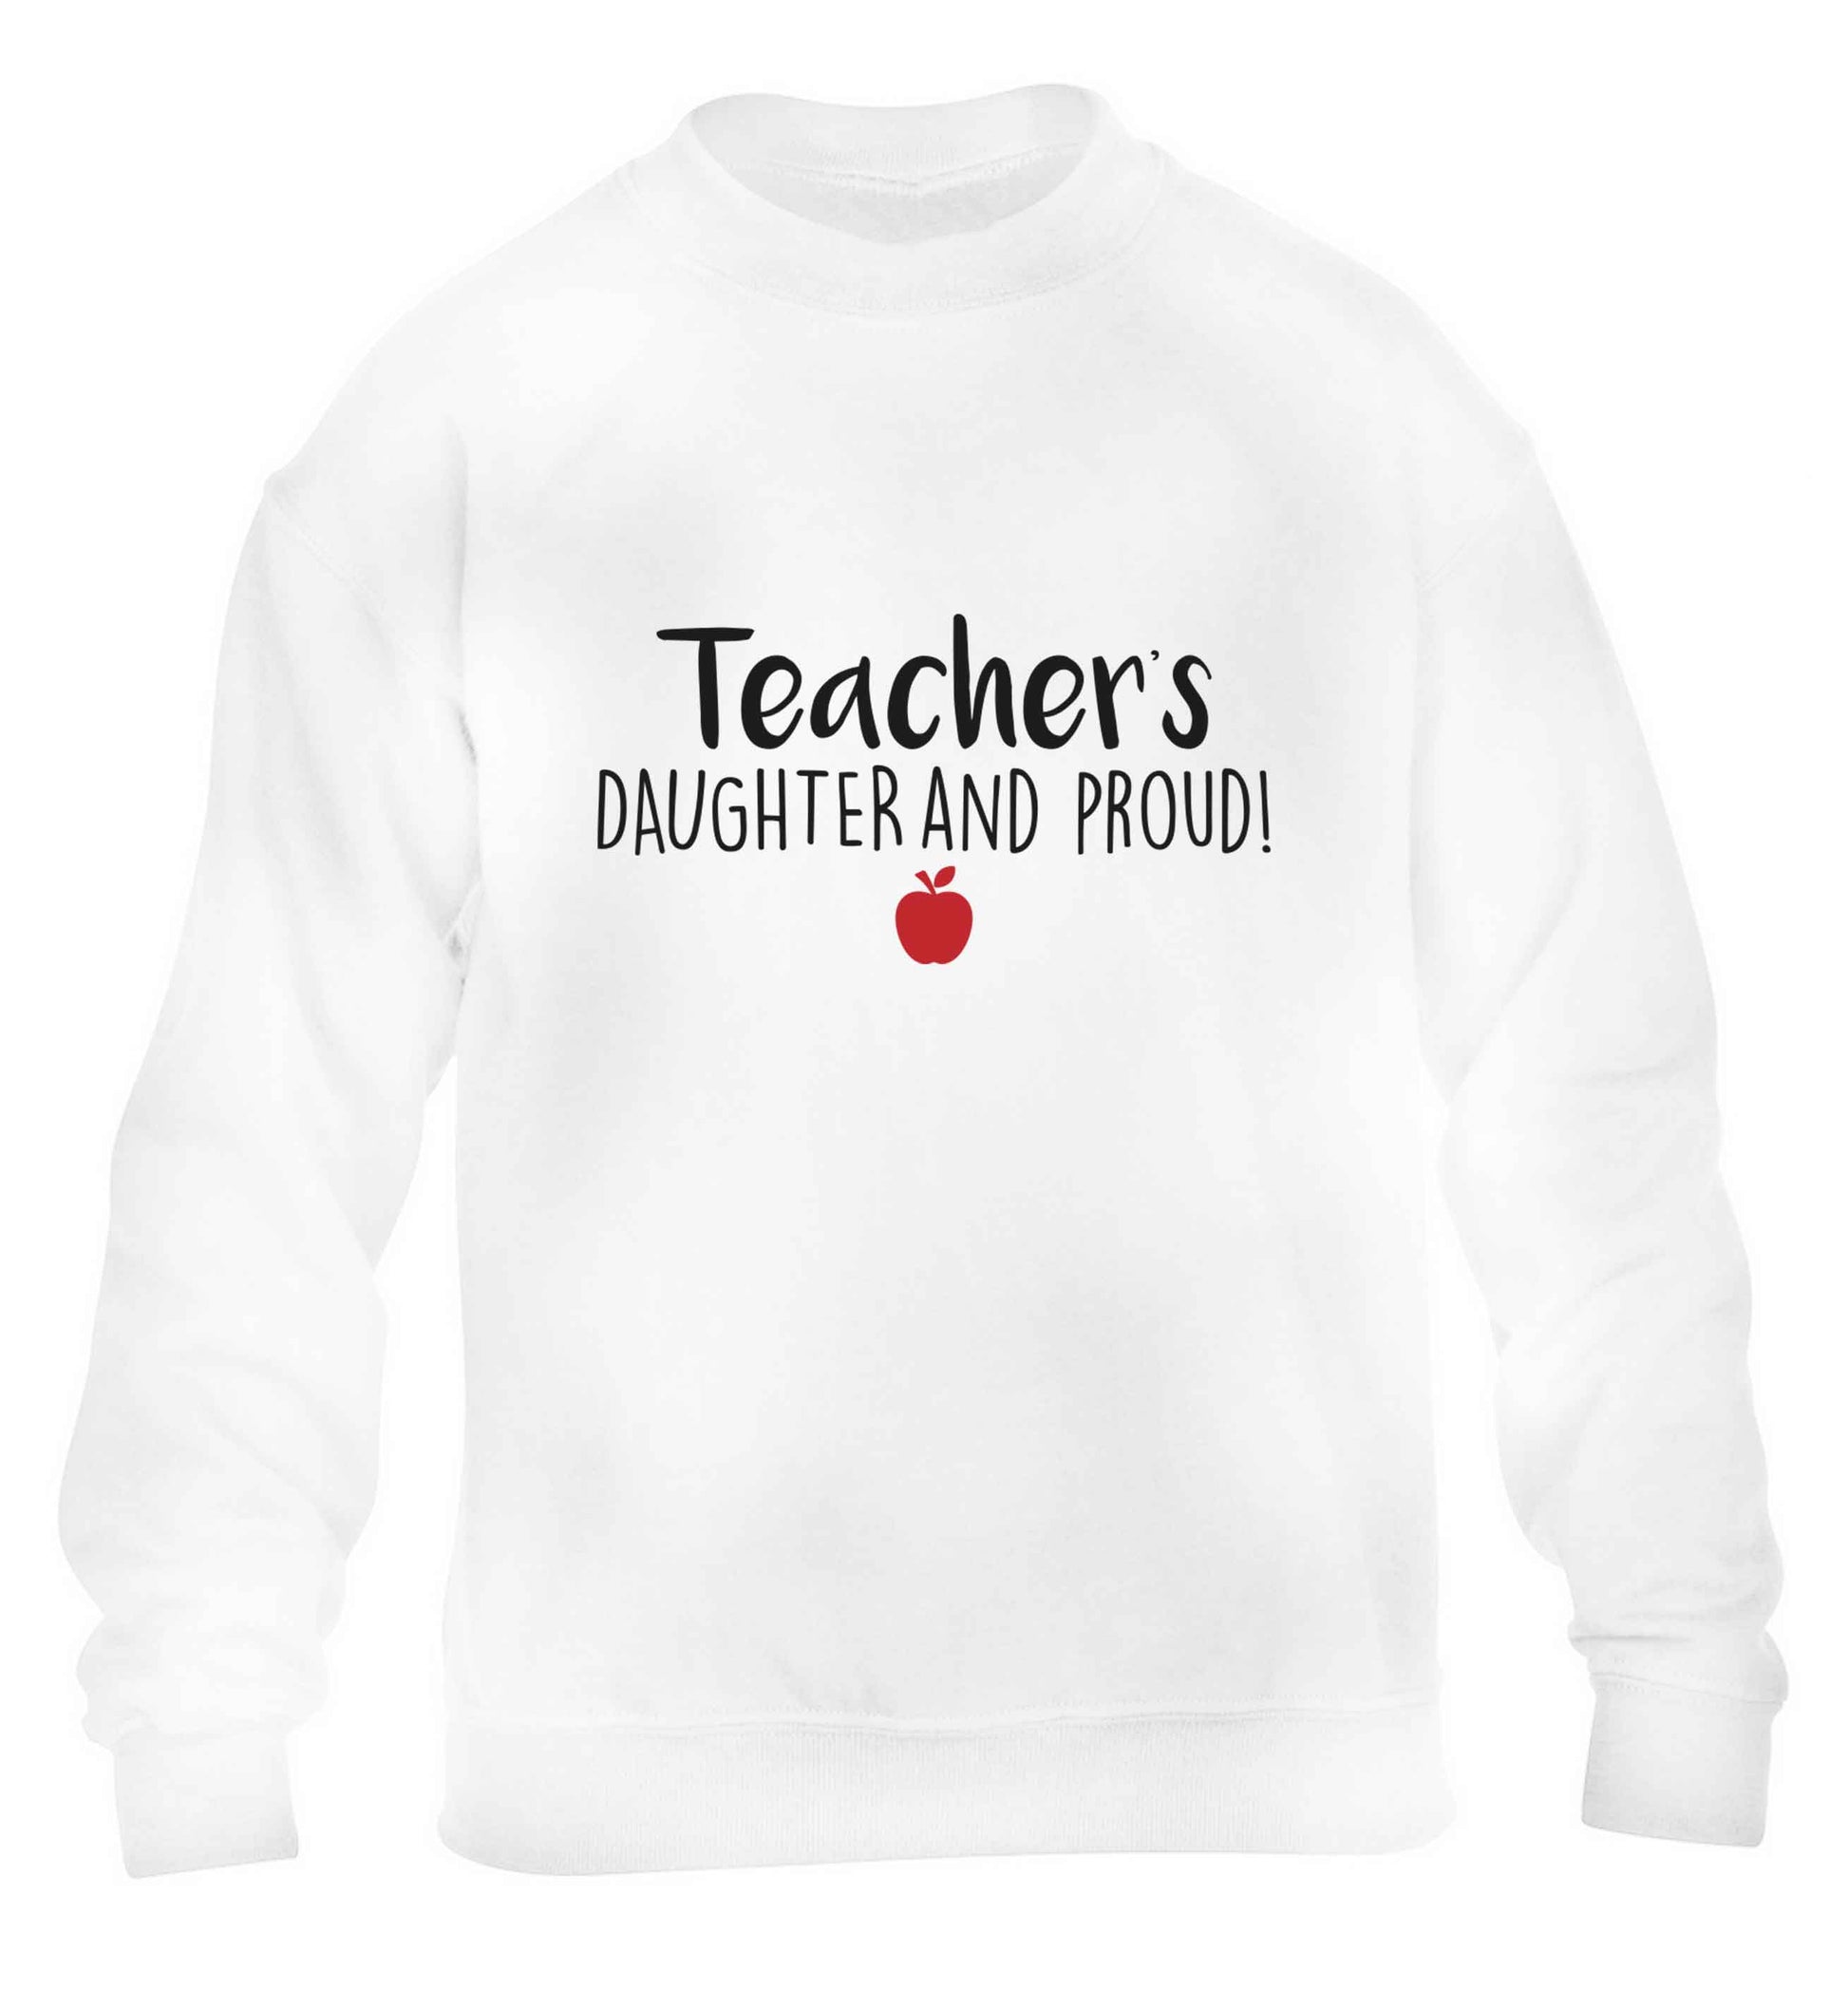 Teachers daughter and proud children's white sweater 12-13 Years